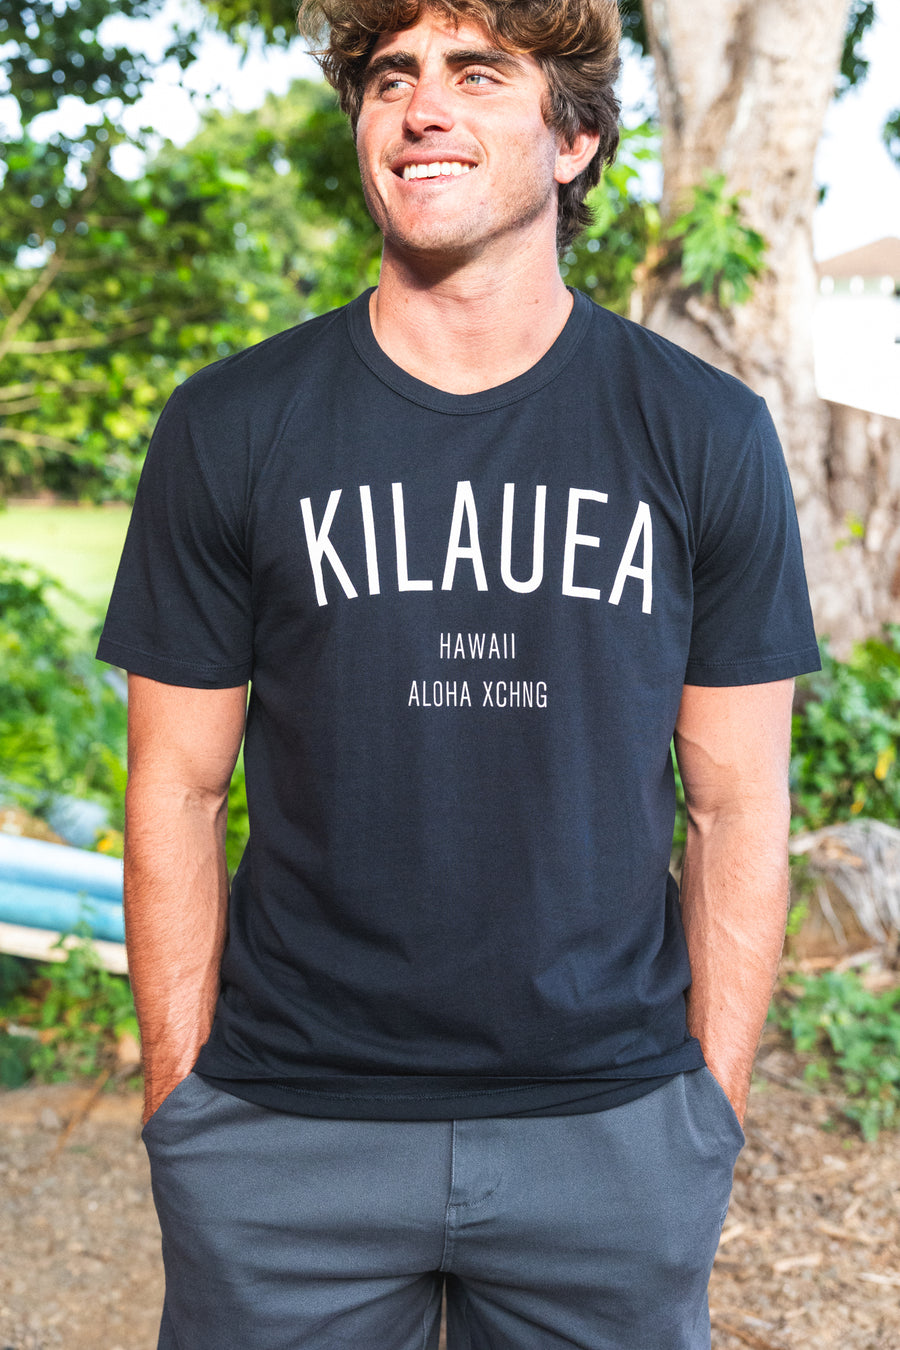 M's Kilauea Tee